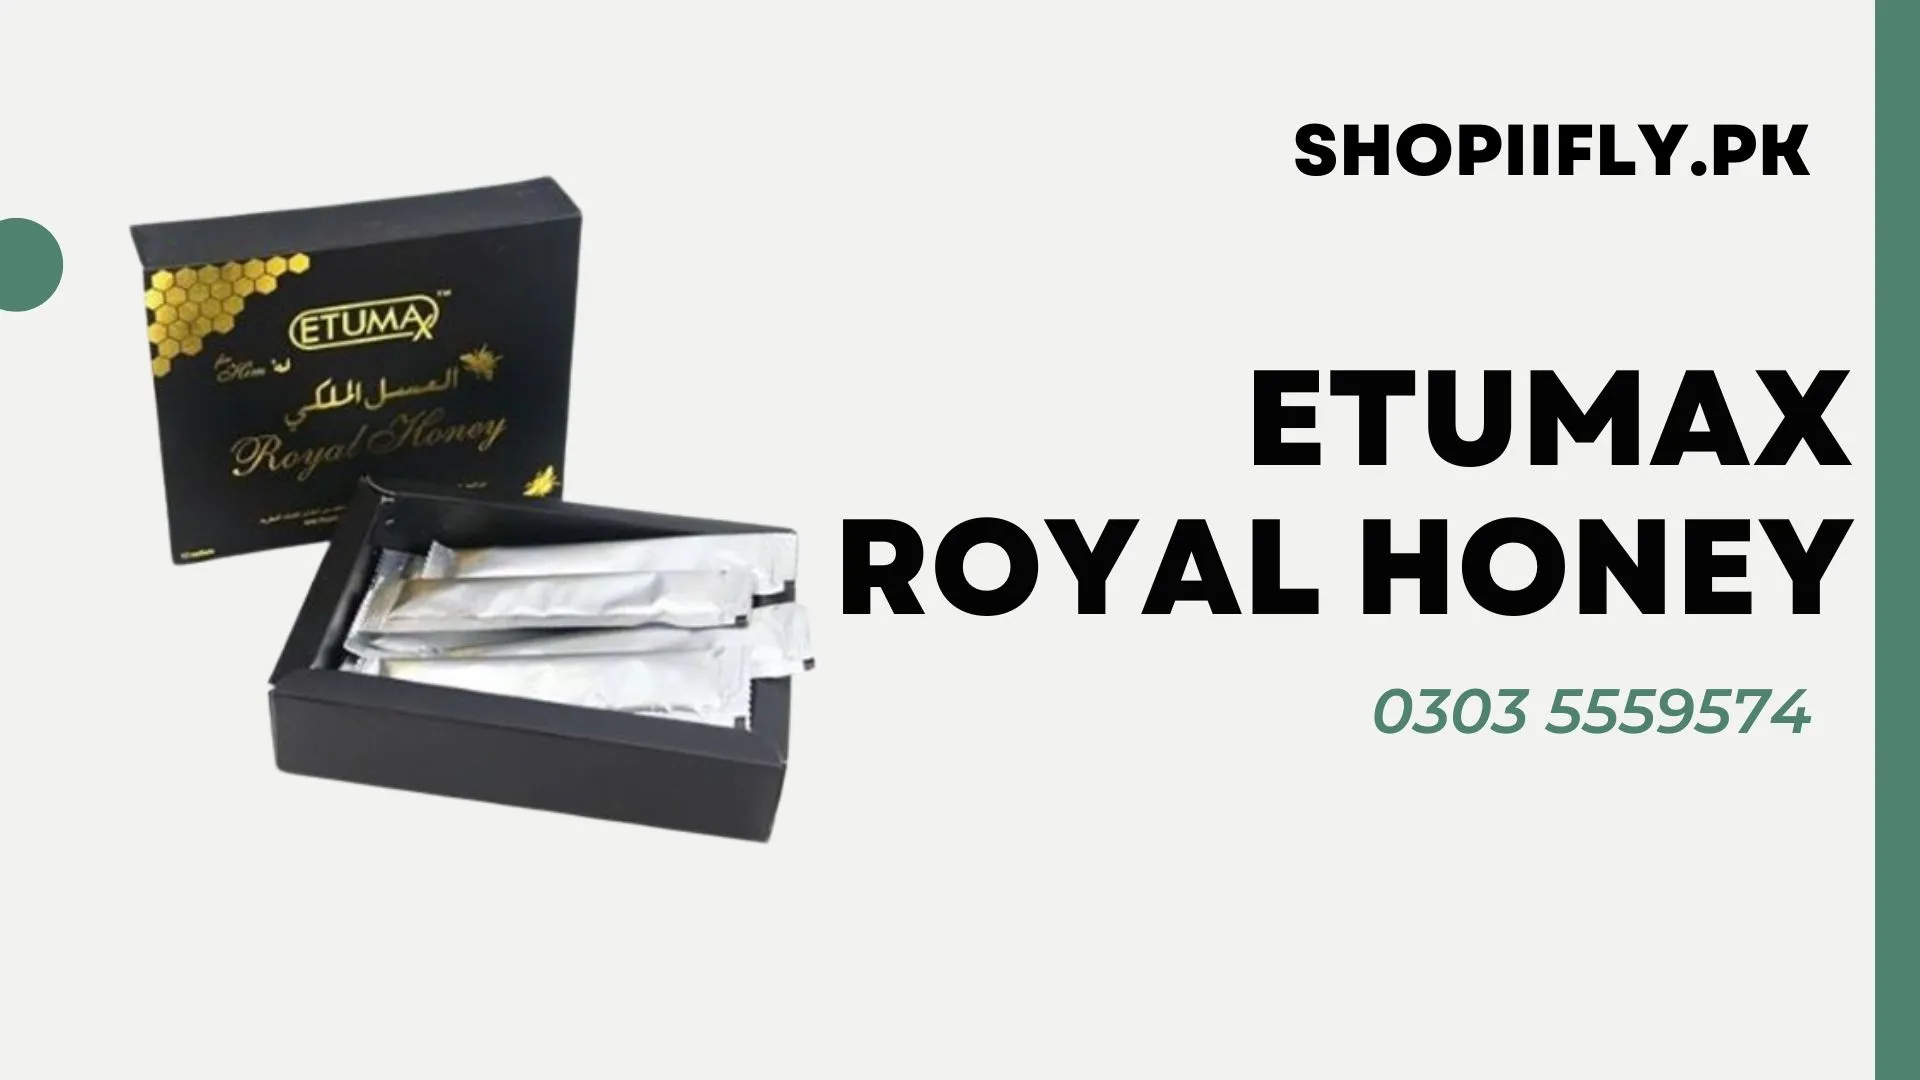 Etumax Royal Honey Malaysia Price